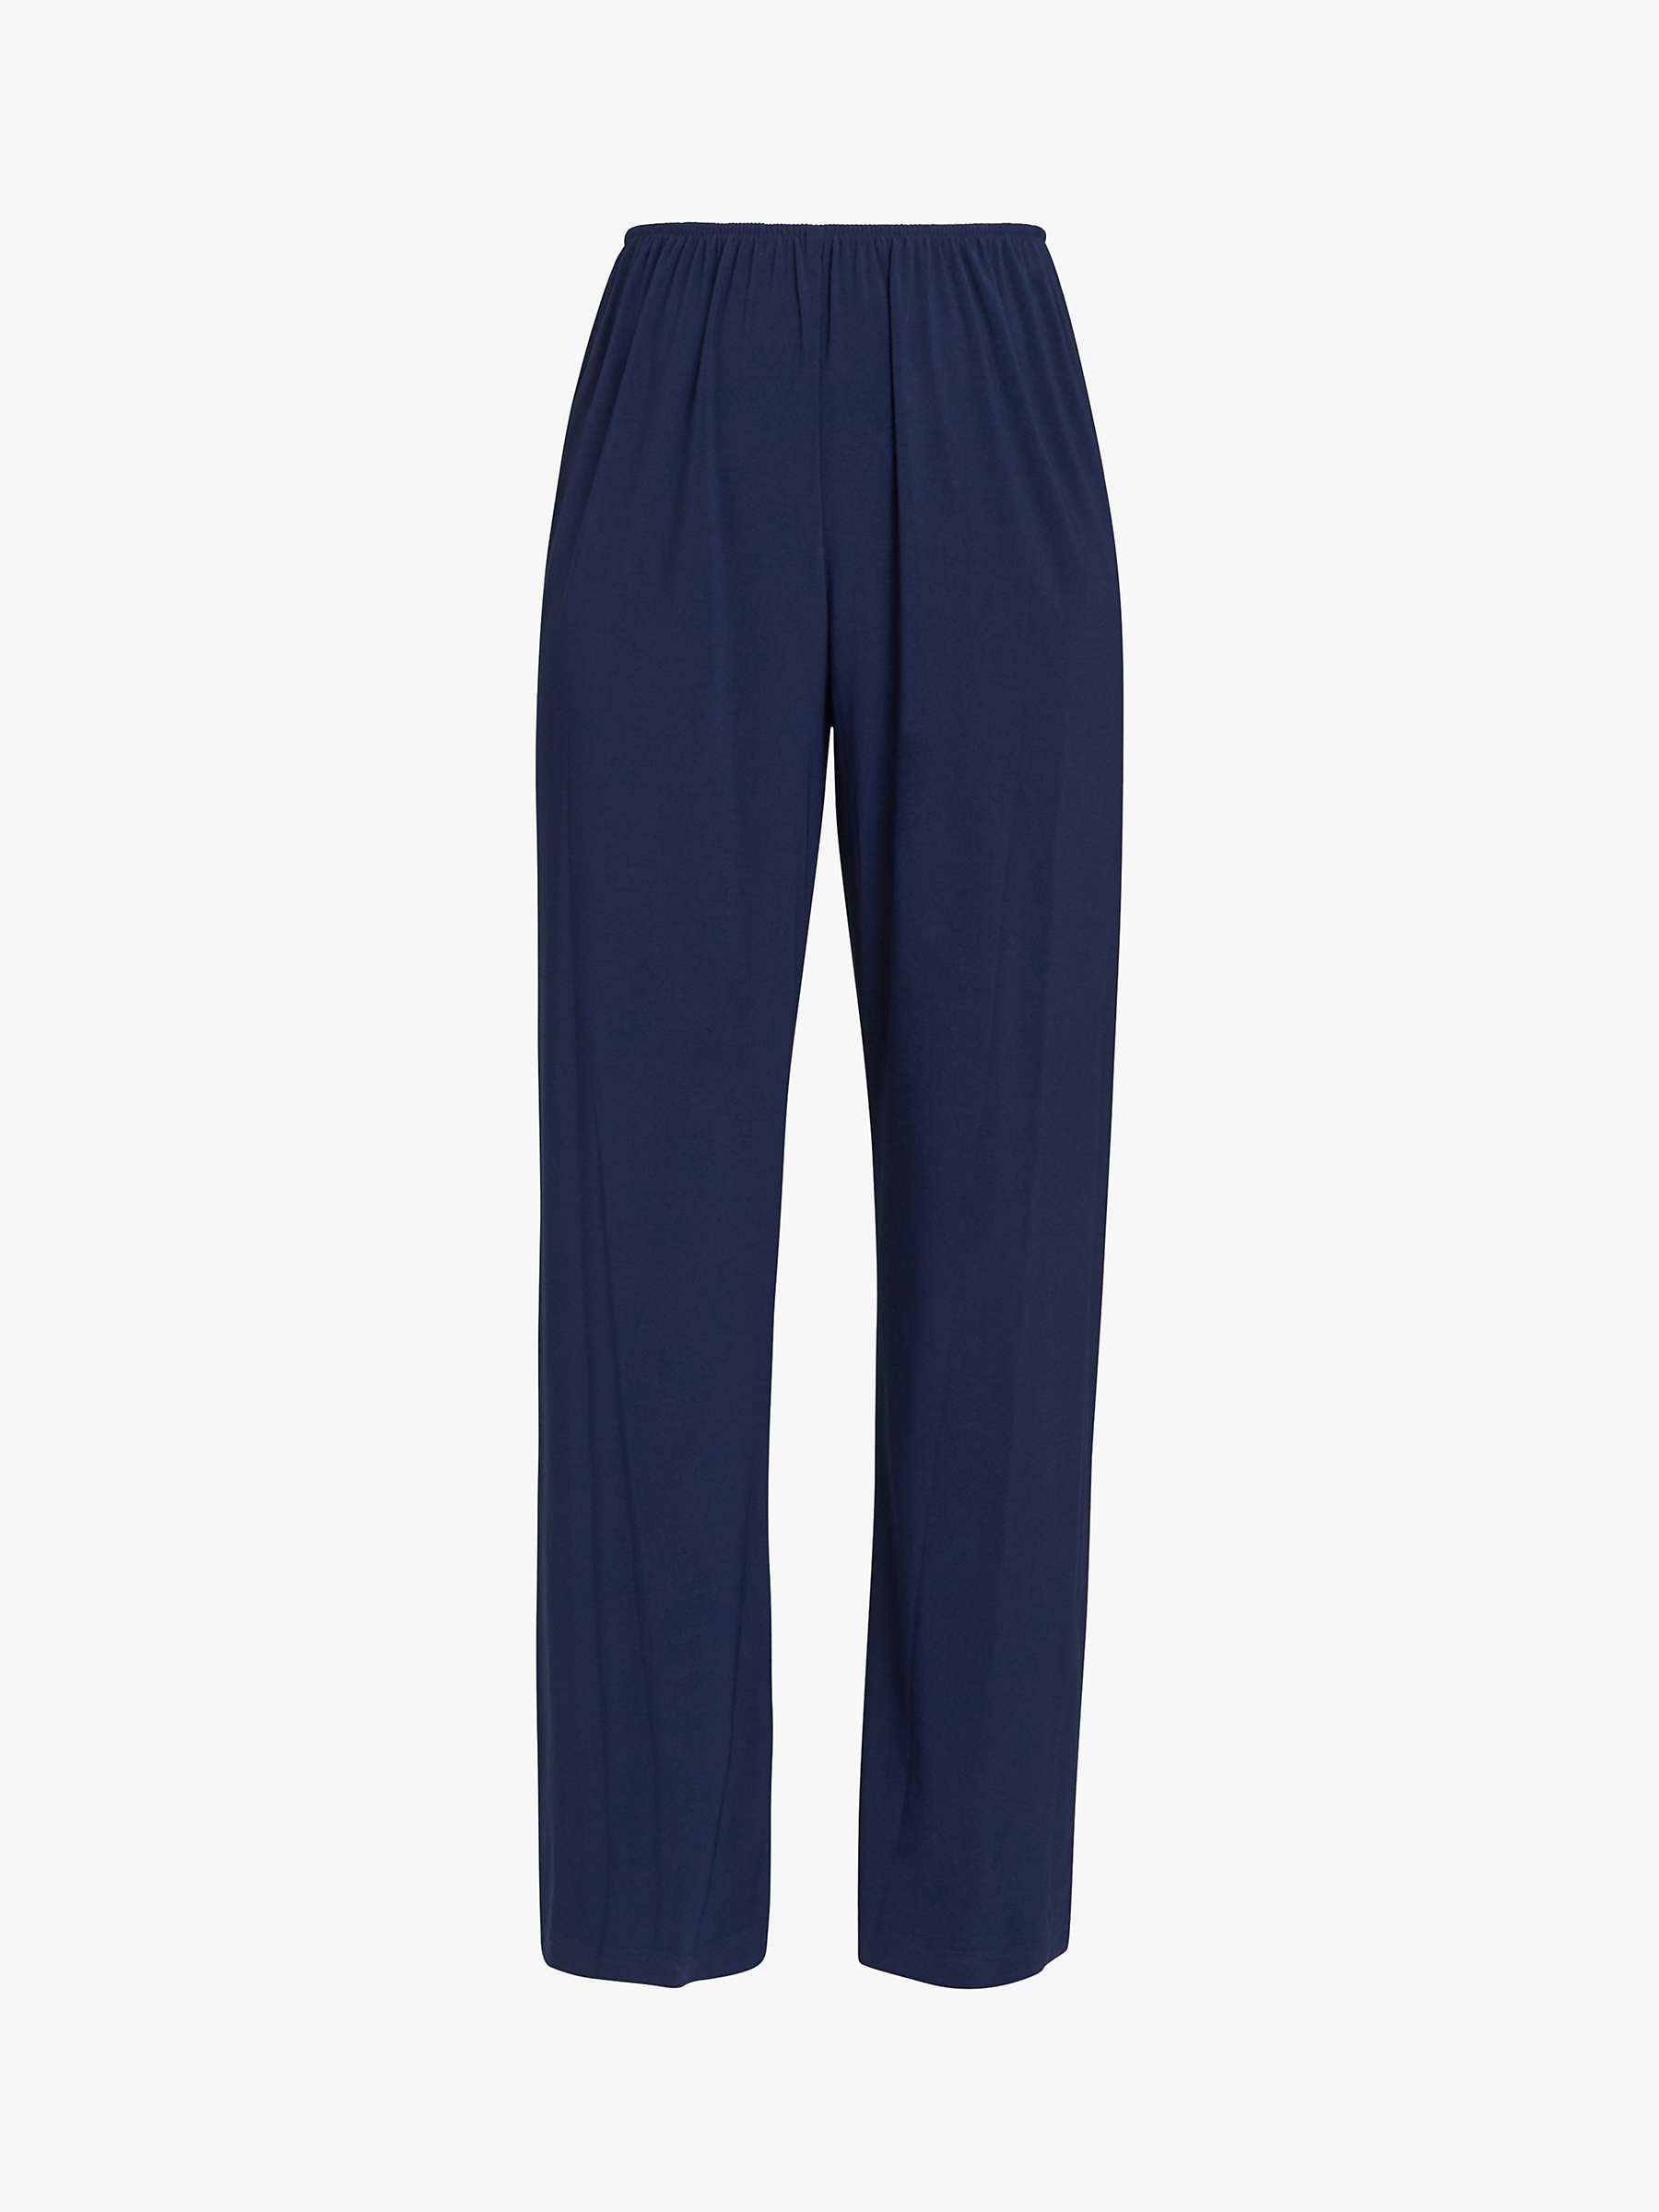 Buy Gina Bacconi Sharlene Matte Jersey Trousers, Dark Navy Online at johnlewis.com